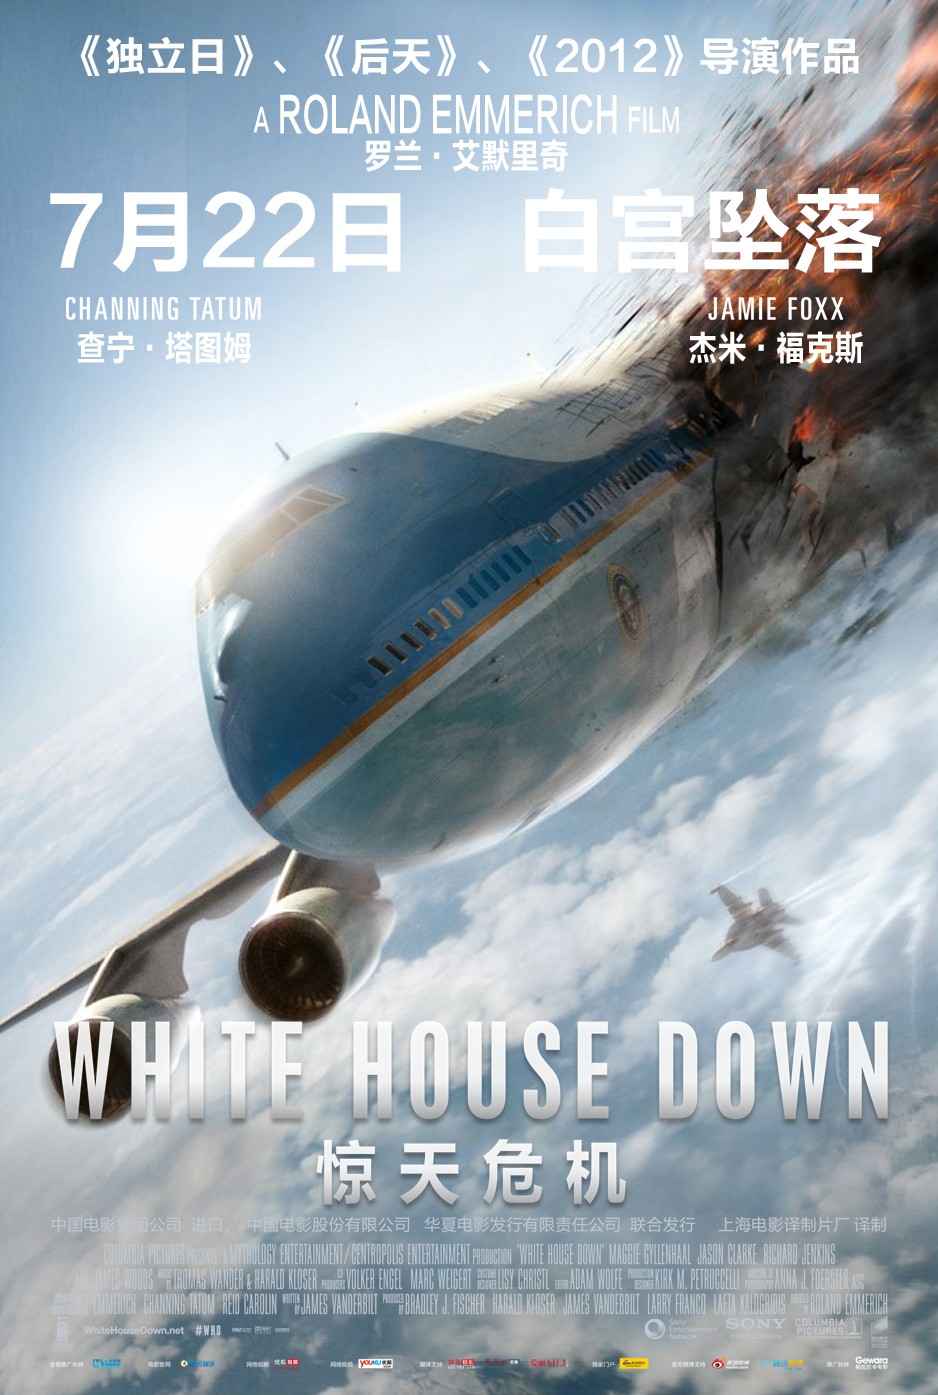 channing tatum white house down poster